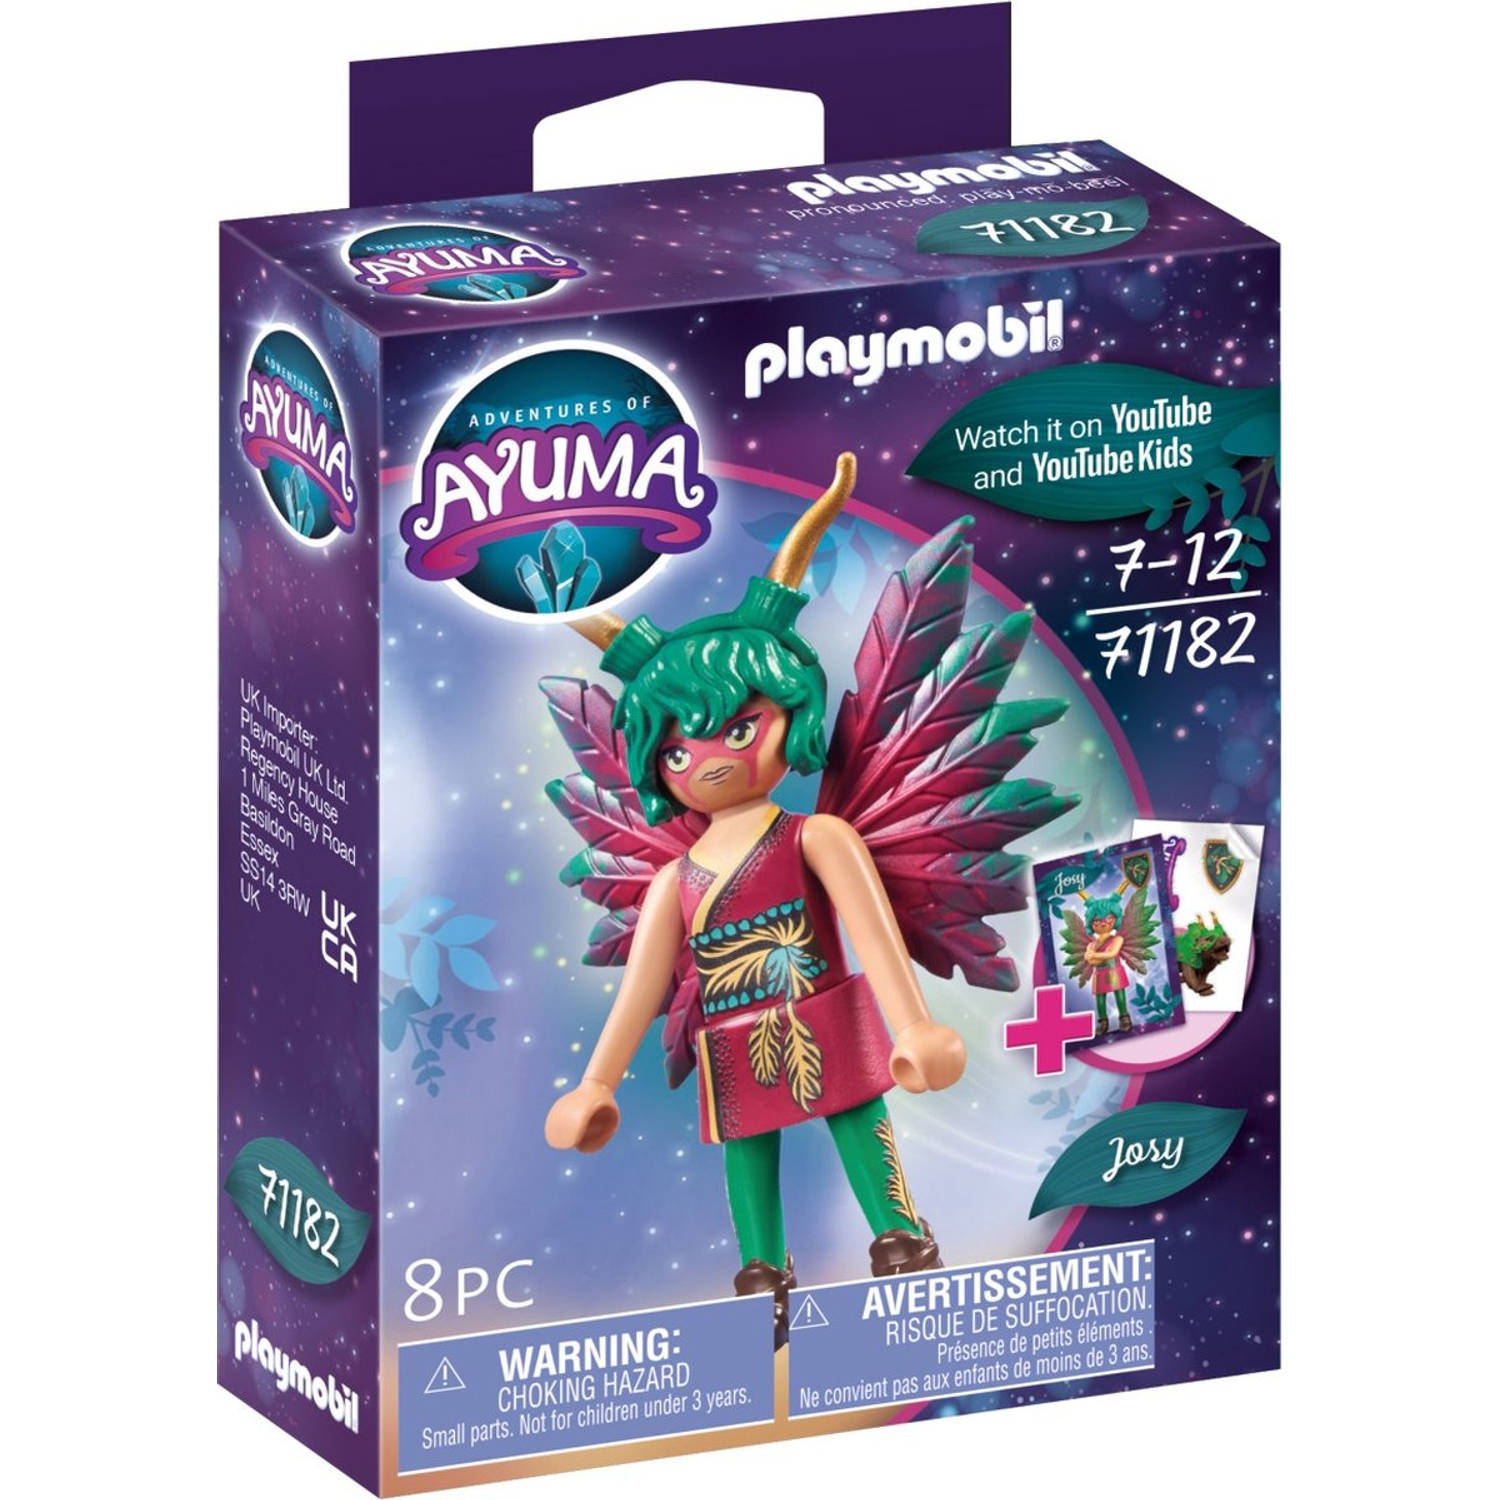 PLAYMOBIL Adventures of Ayuma Knight Fairy Josy - 71182